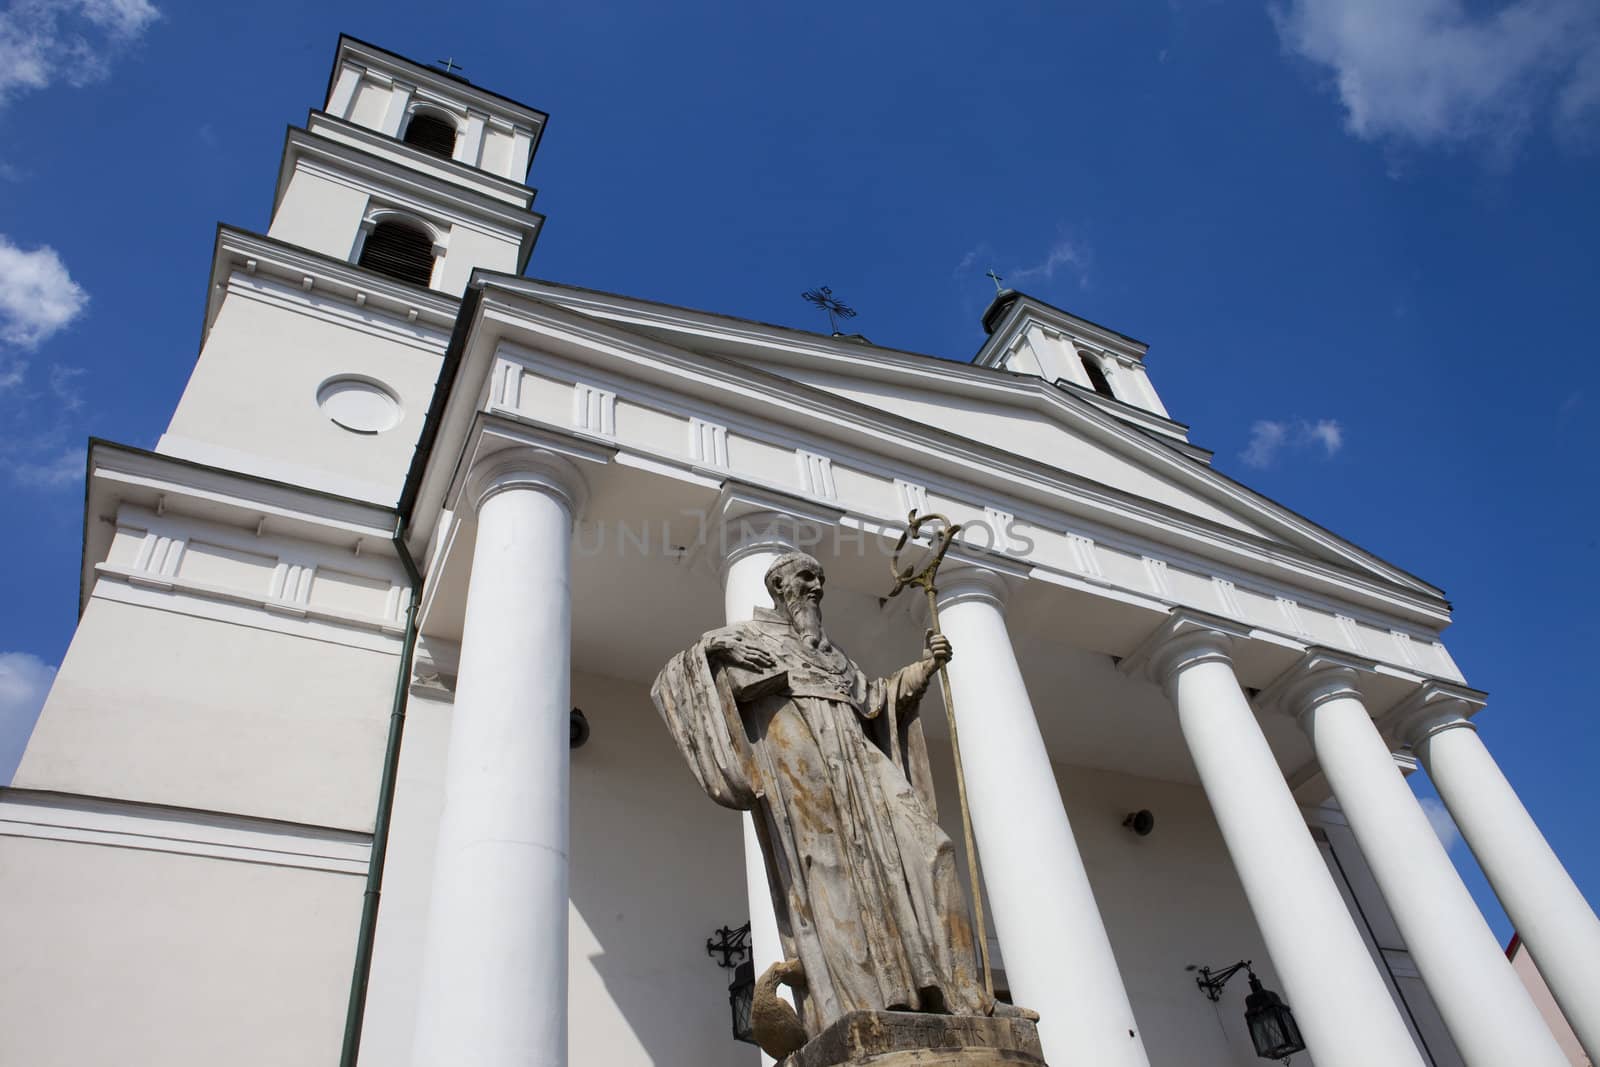 St. Alexander's Church in Suwalki - Poland by chrisdorney